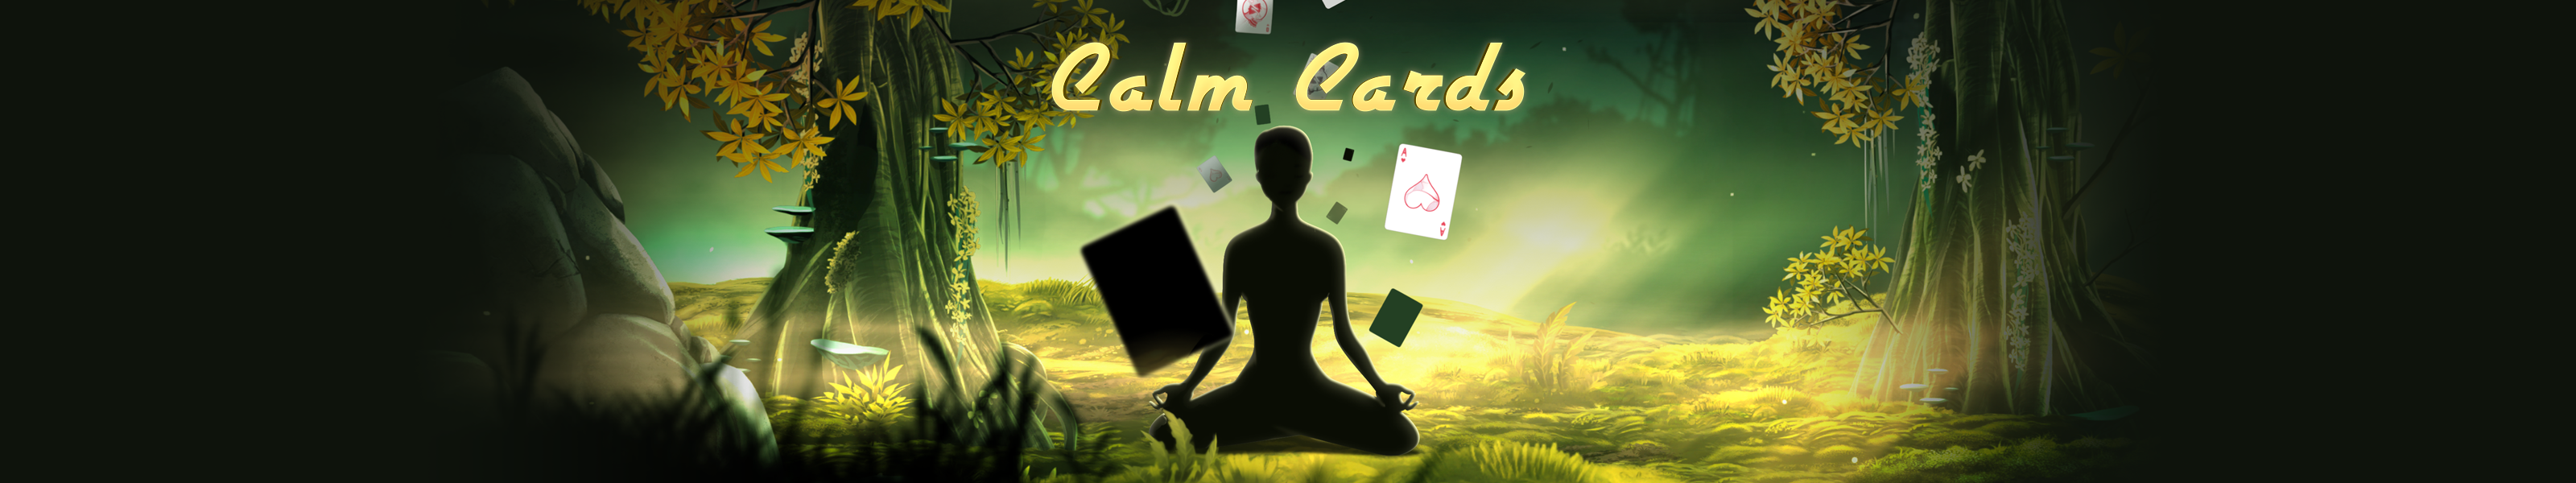 Calm Cards - Klondike